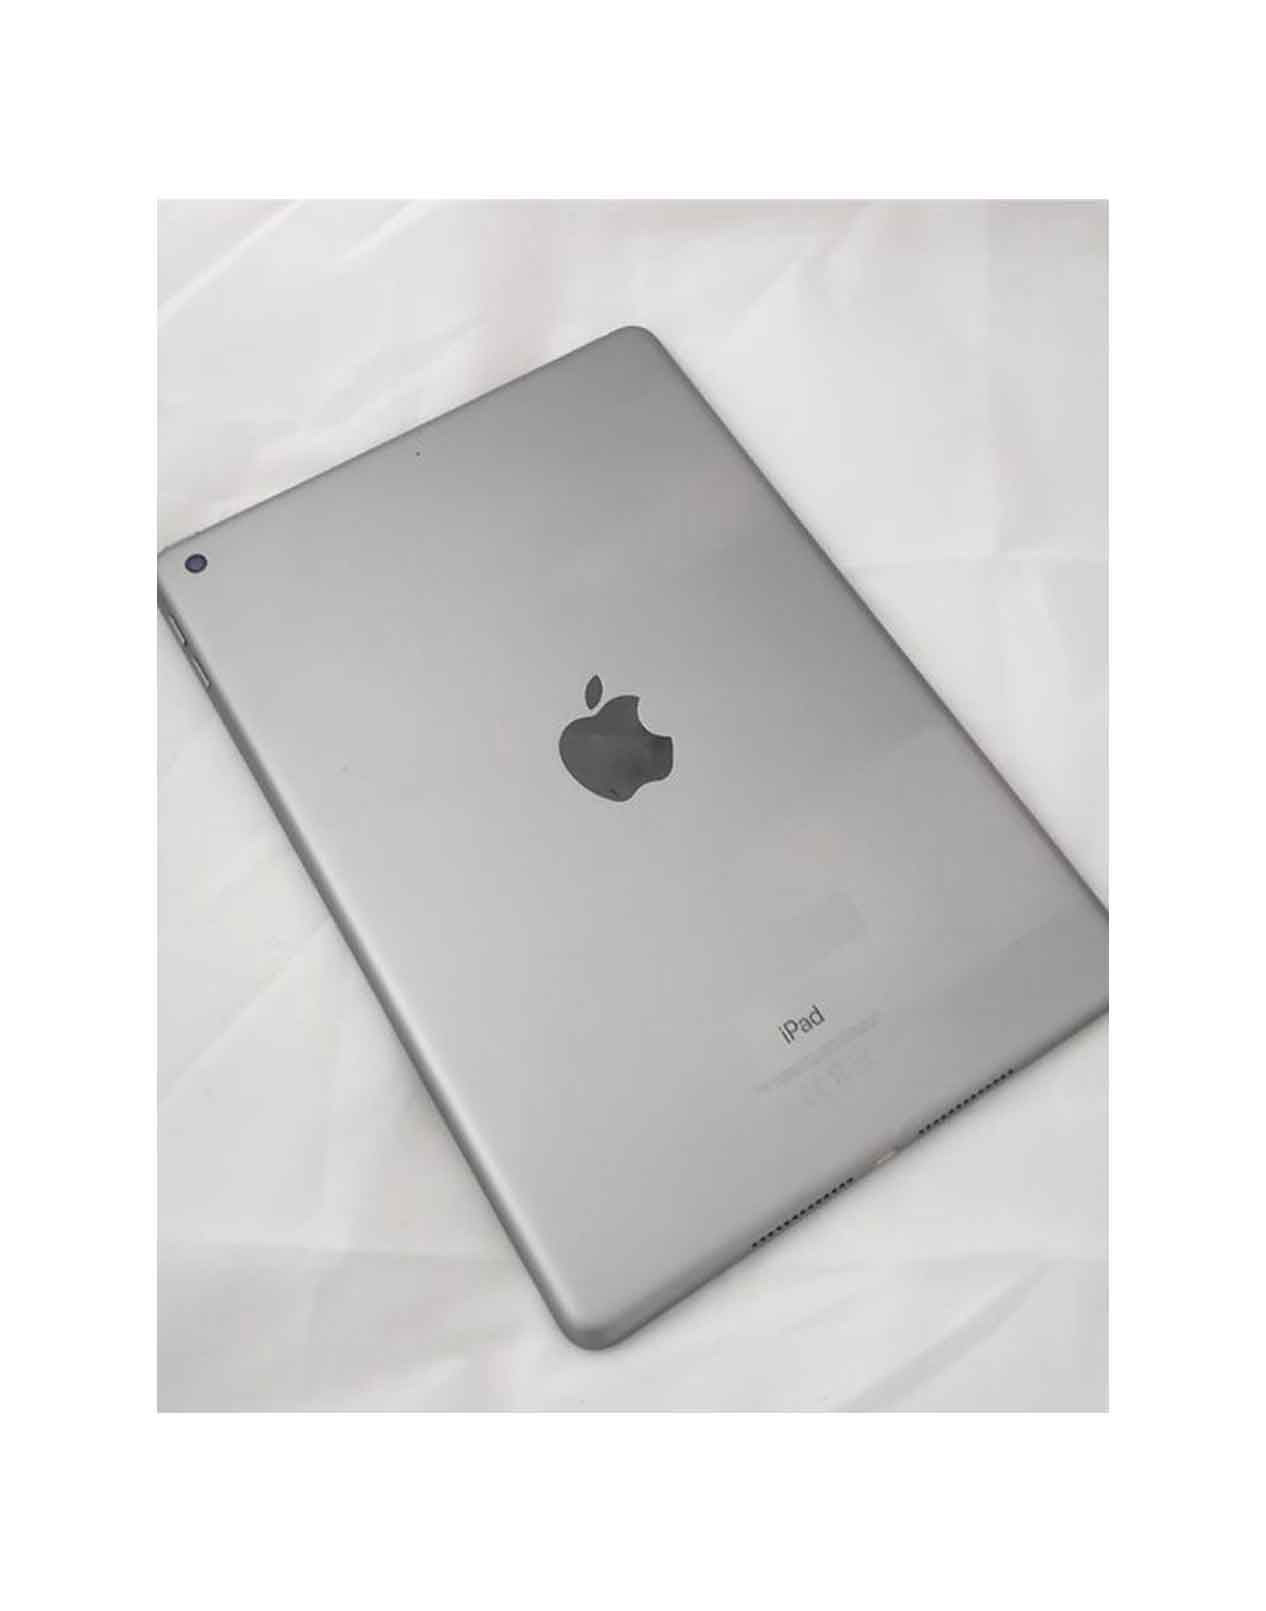 Apple iPad 5 32GB Wifi Space Gray A1822 (As New) Free Shipping